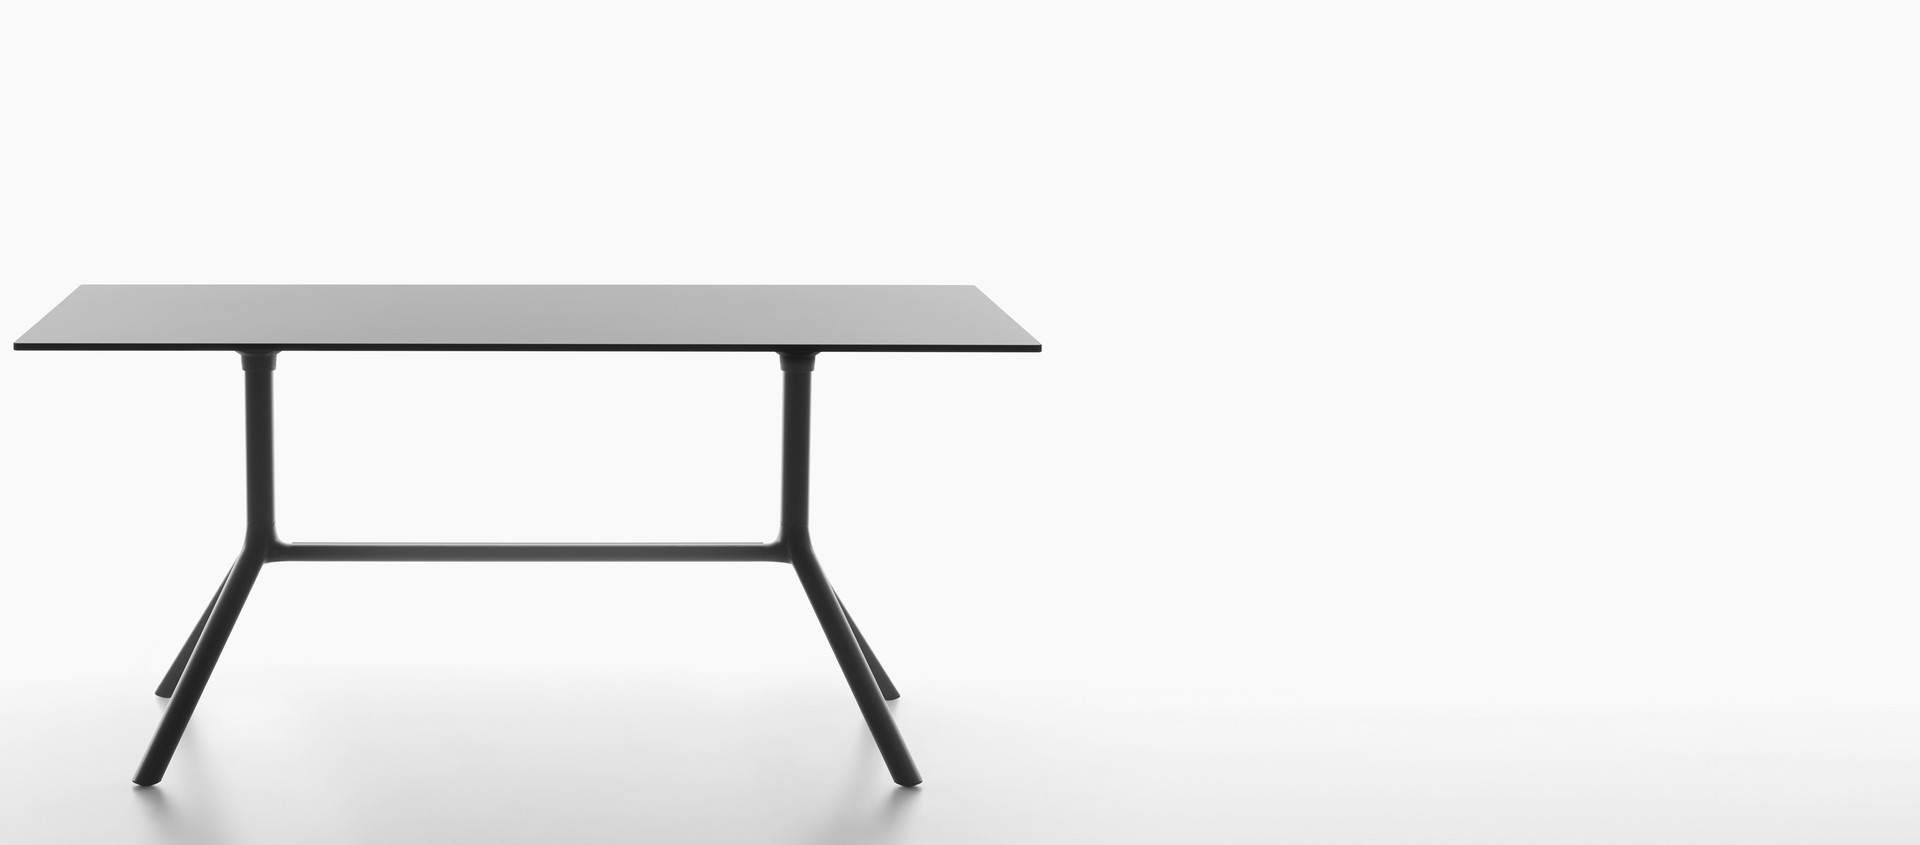 HERO - MIURA table rectangular table top, 73 cm high